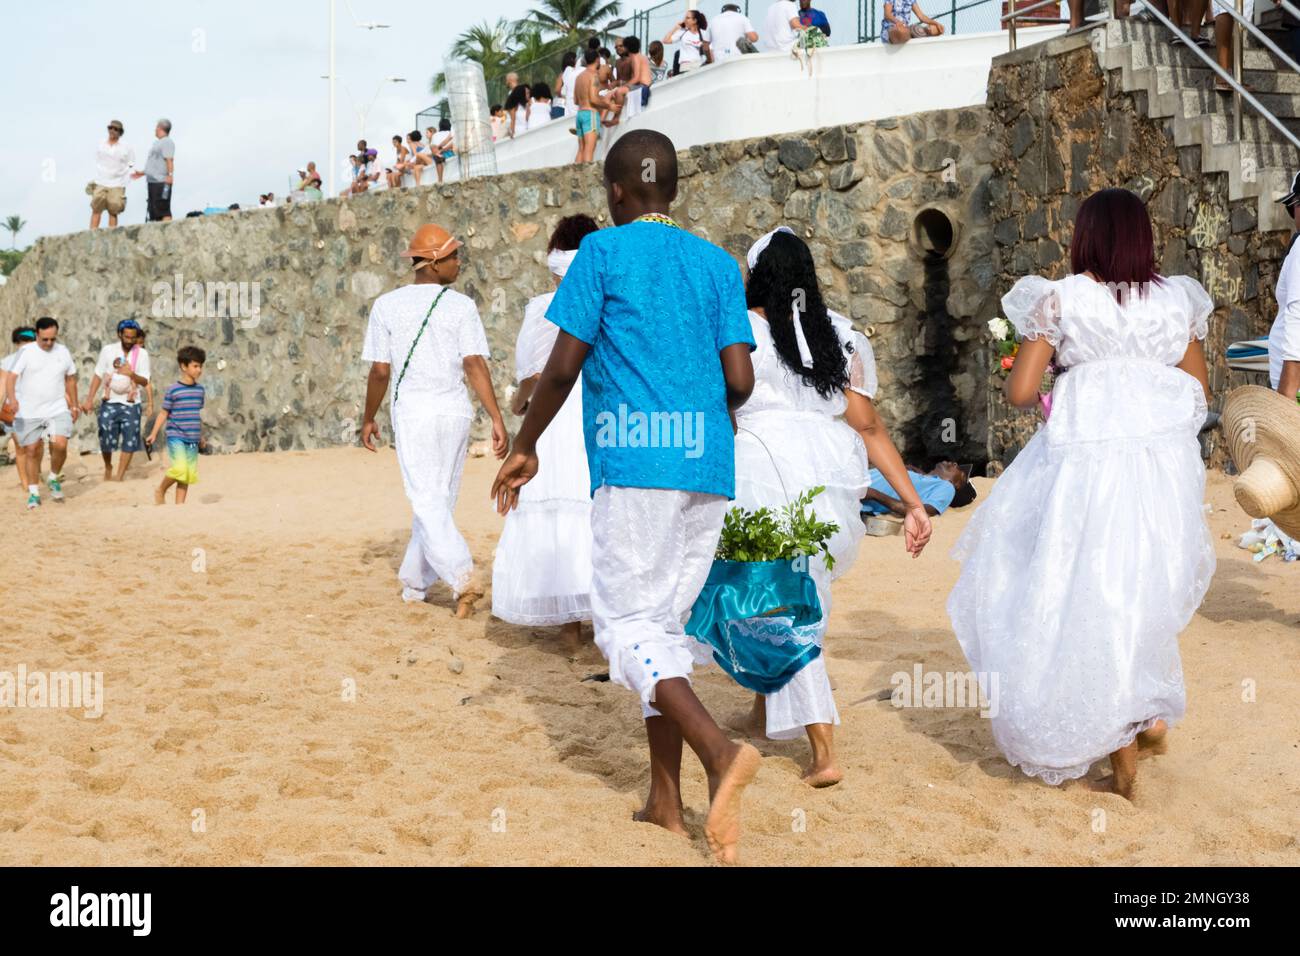 Salvador, Bahia, Brazil - February 02, 2017: Candomble fans revere Iemanja during the religious festival on Rio Vermelho beach in Salvador, Bahia. Stock Photo